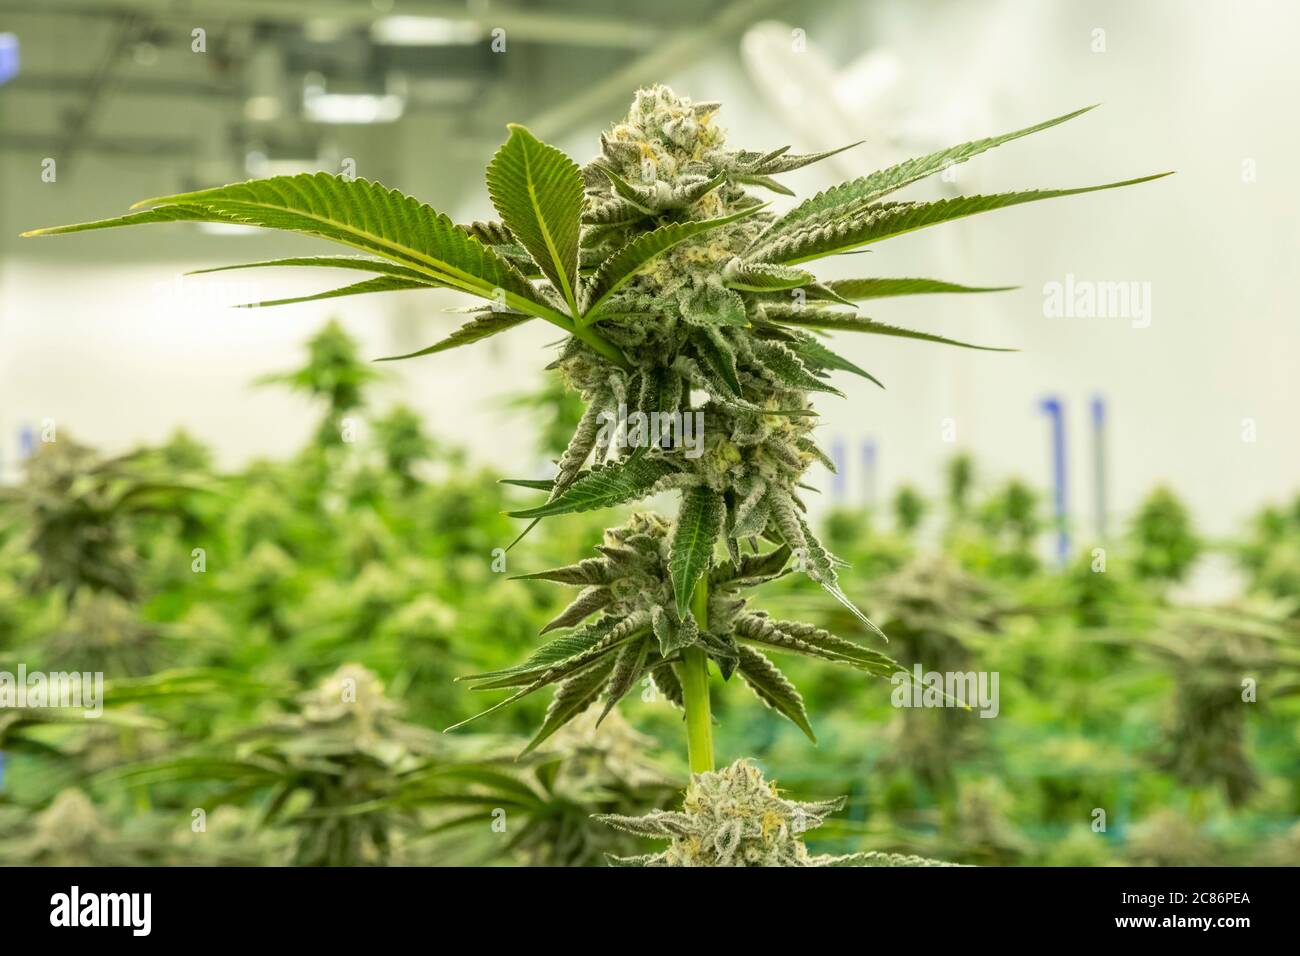 Marijuana Grow House High Resolution Stock Photography And Images Alamy